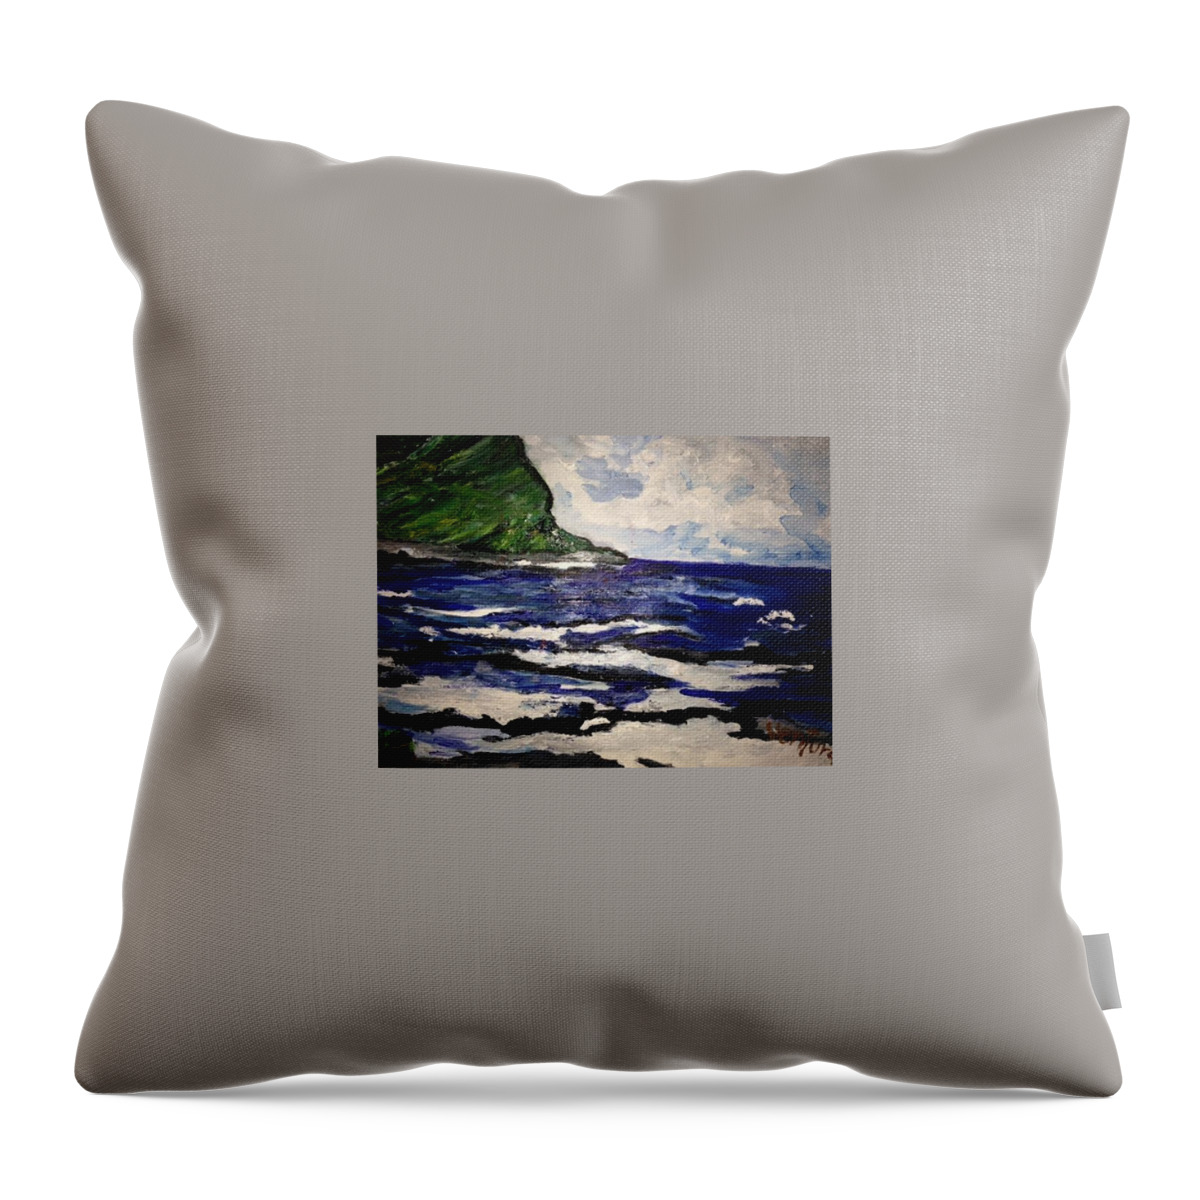 Waipio Valley Throw Pillow featuring the painting Waipio Valley Beach by Clare Ventura